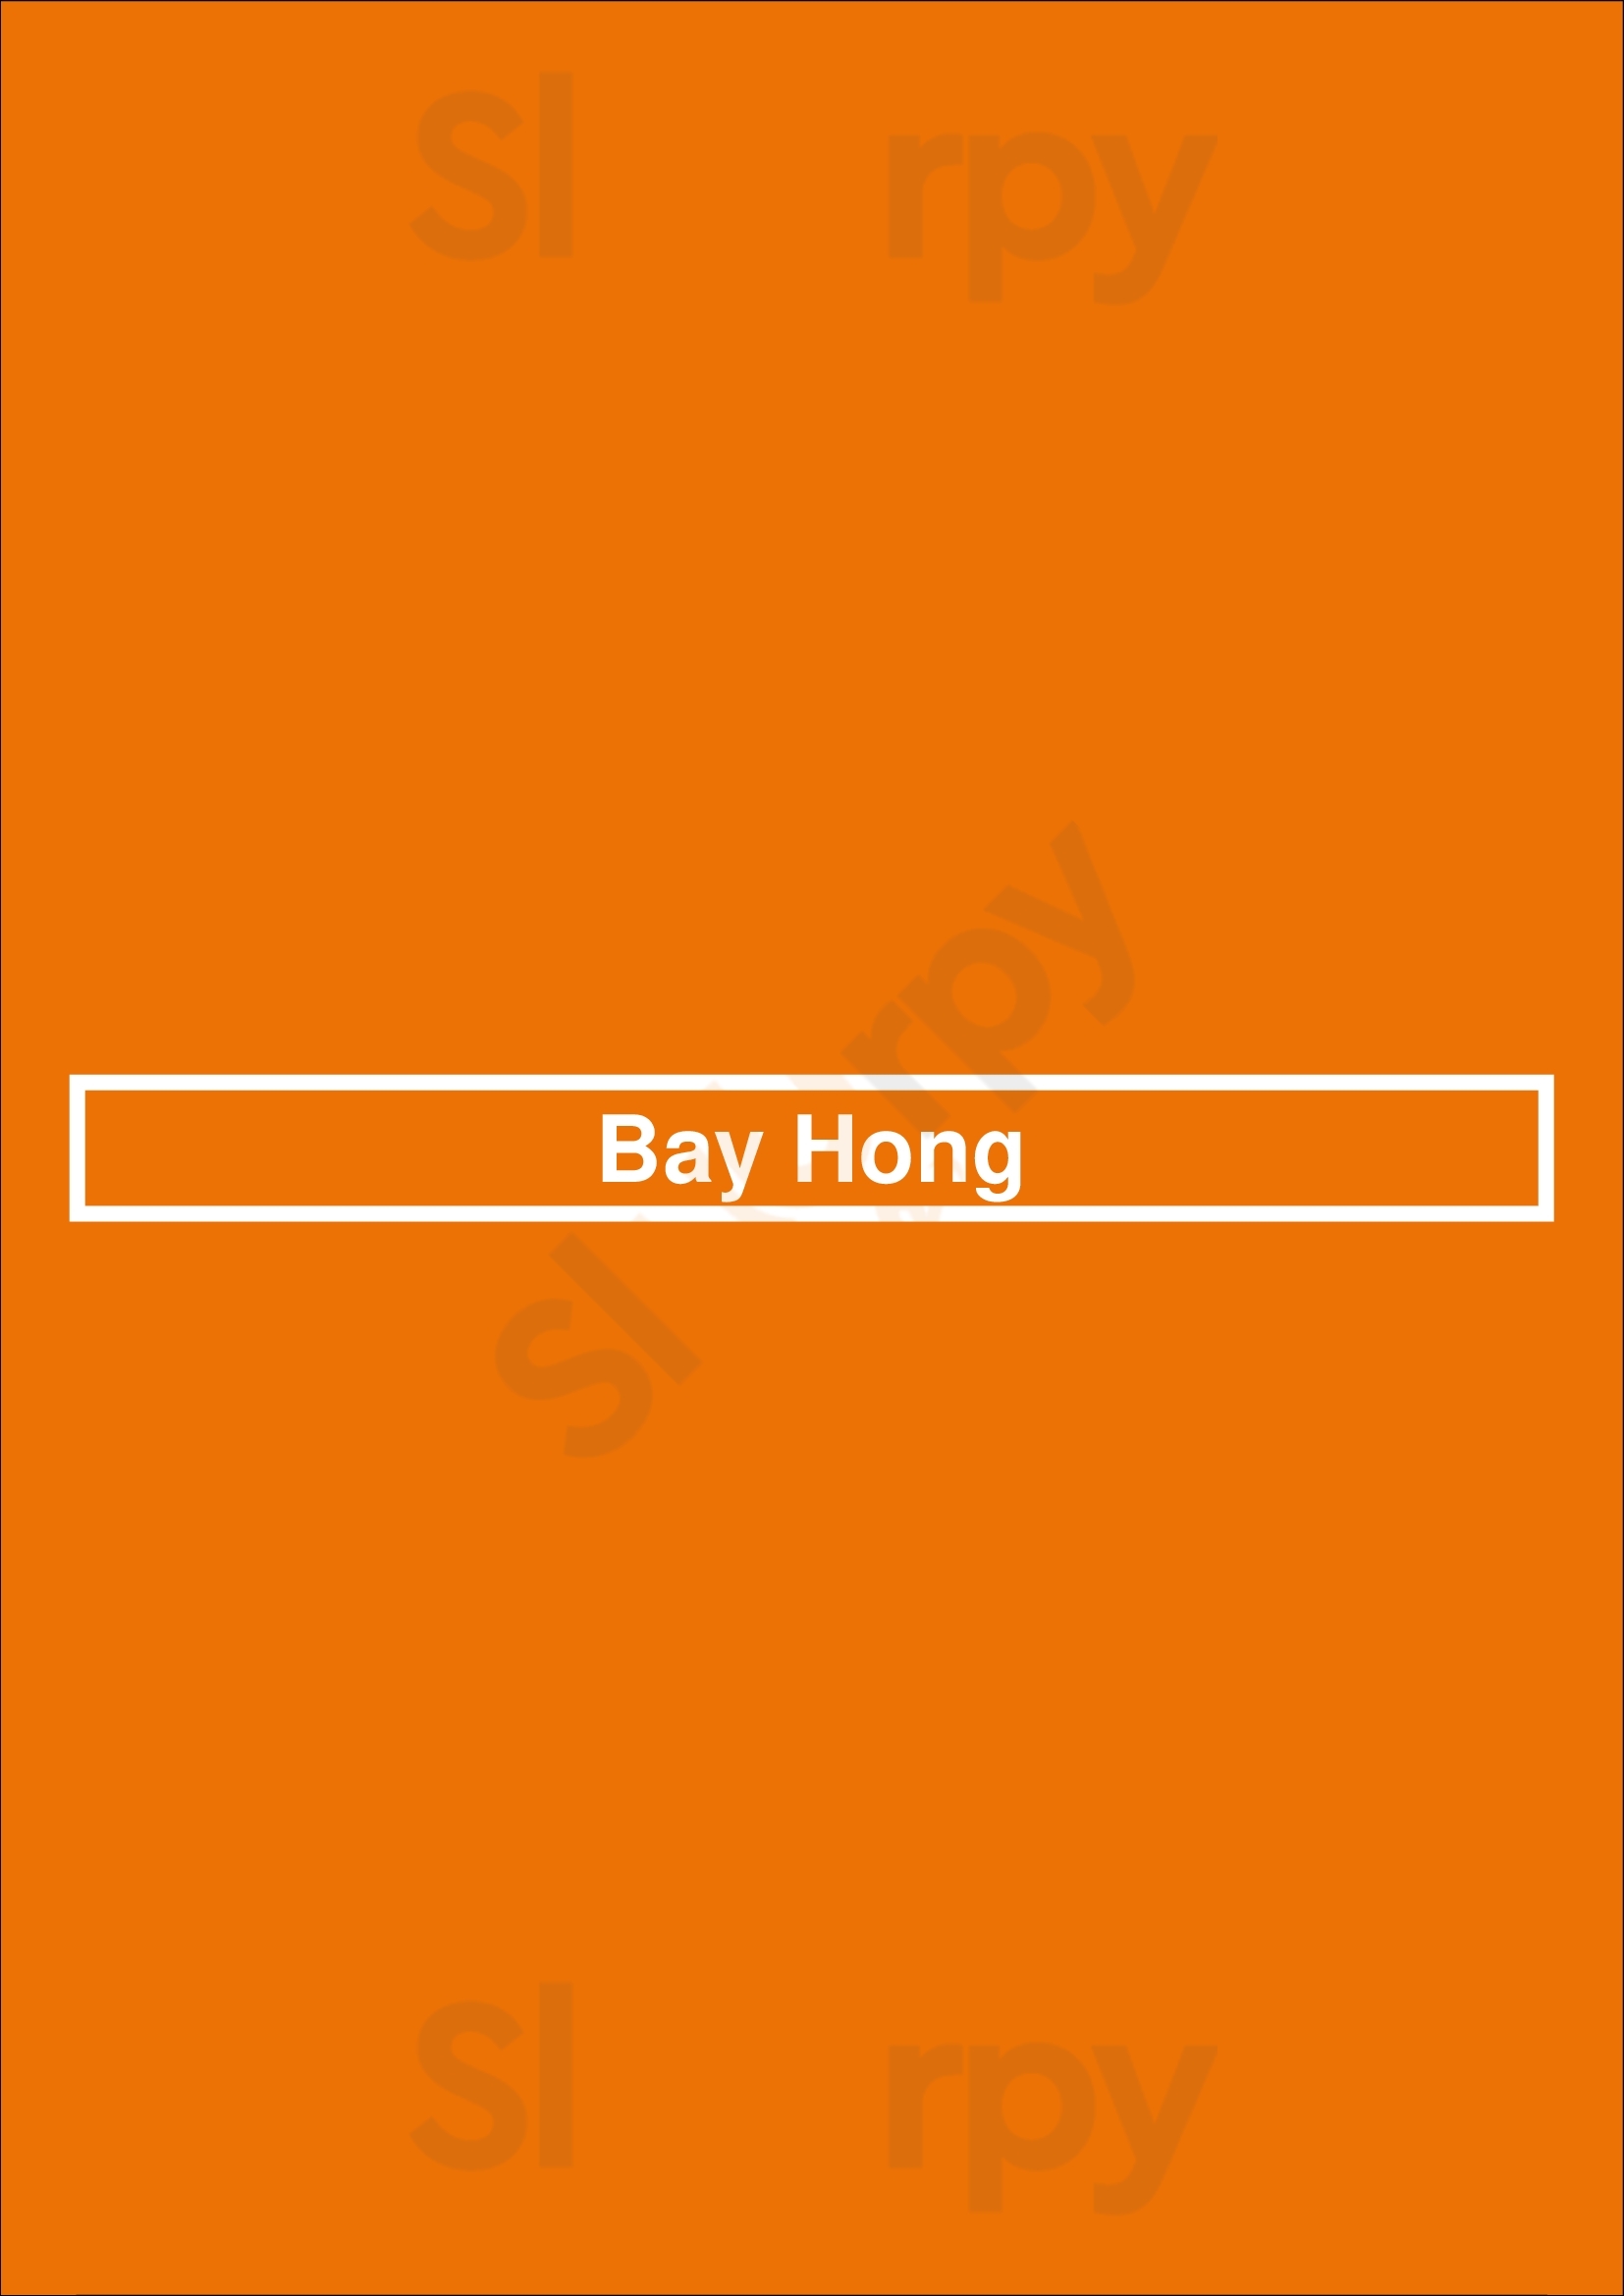 Bay Hong Sydney Menu - 1